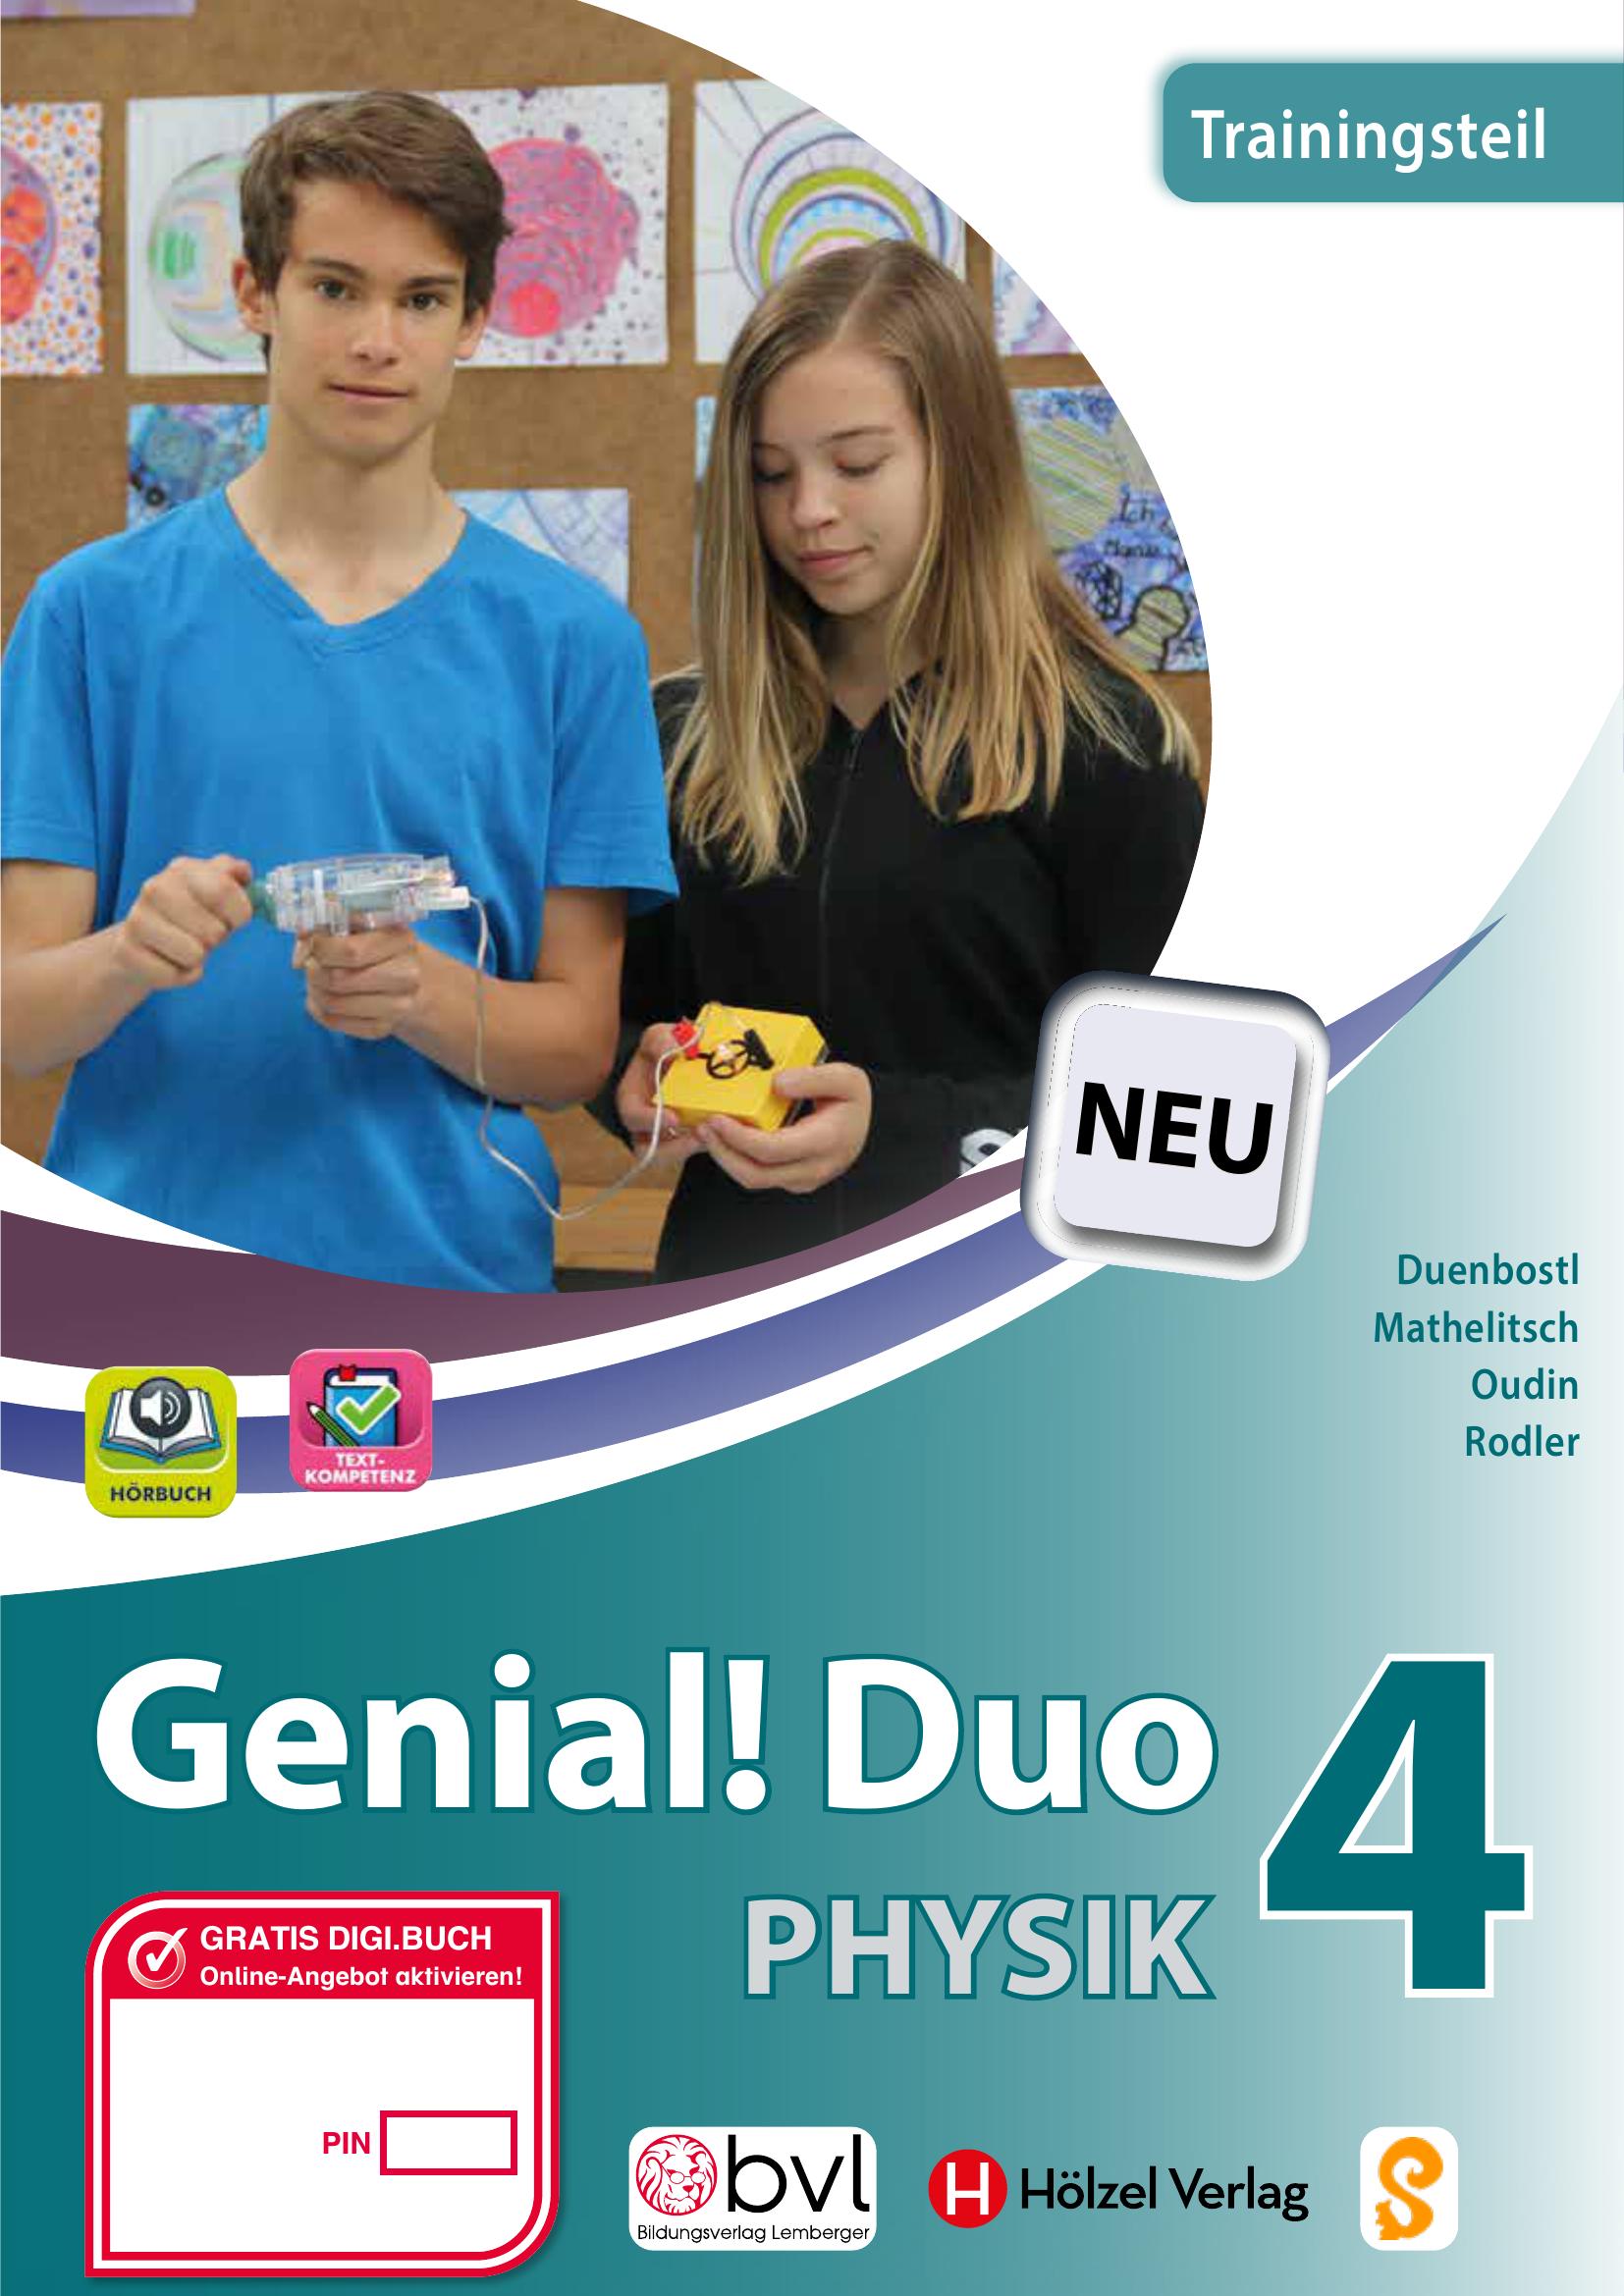 Genial! DUO Physik 4 – Trainings-Teil PLUS-Lizenz mit eSquirrel